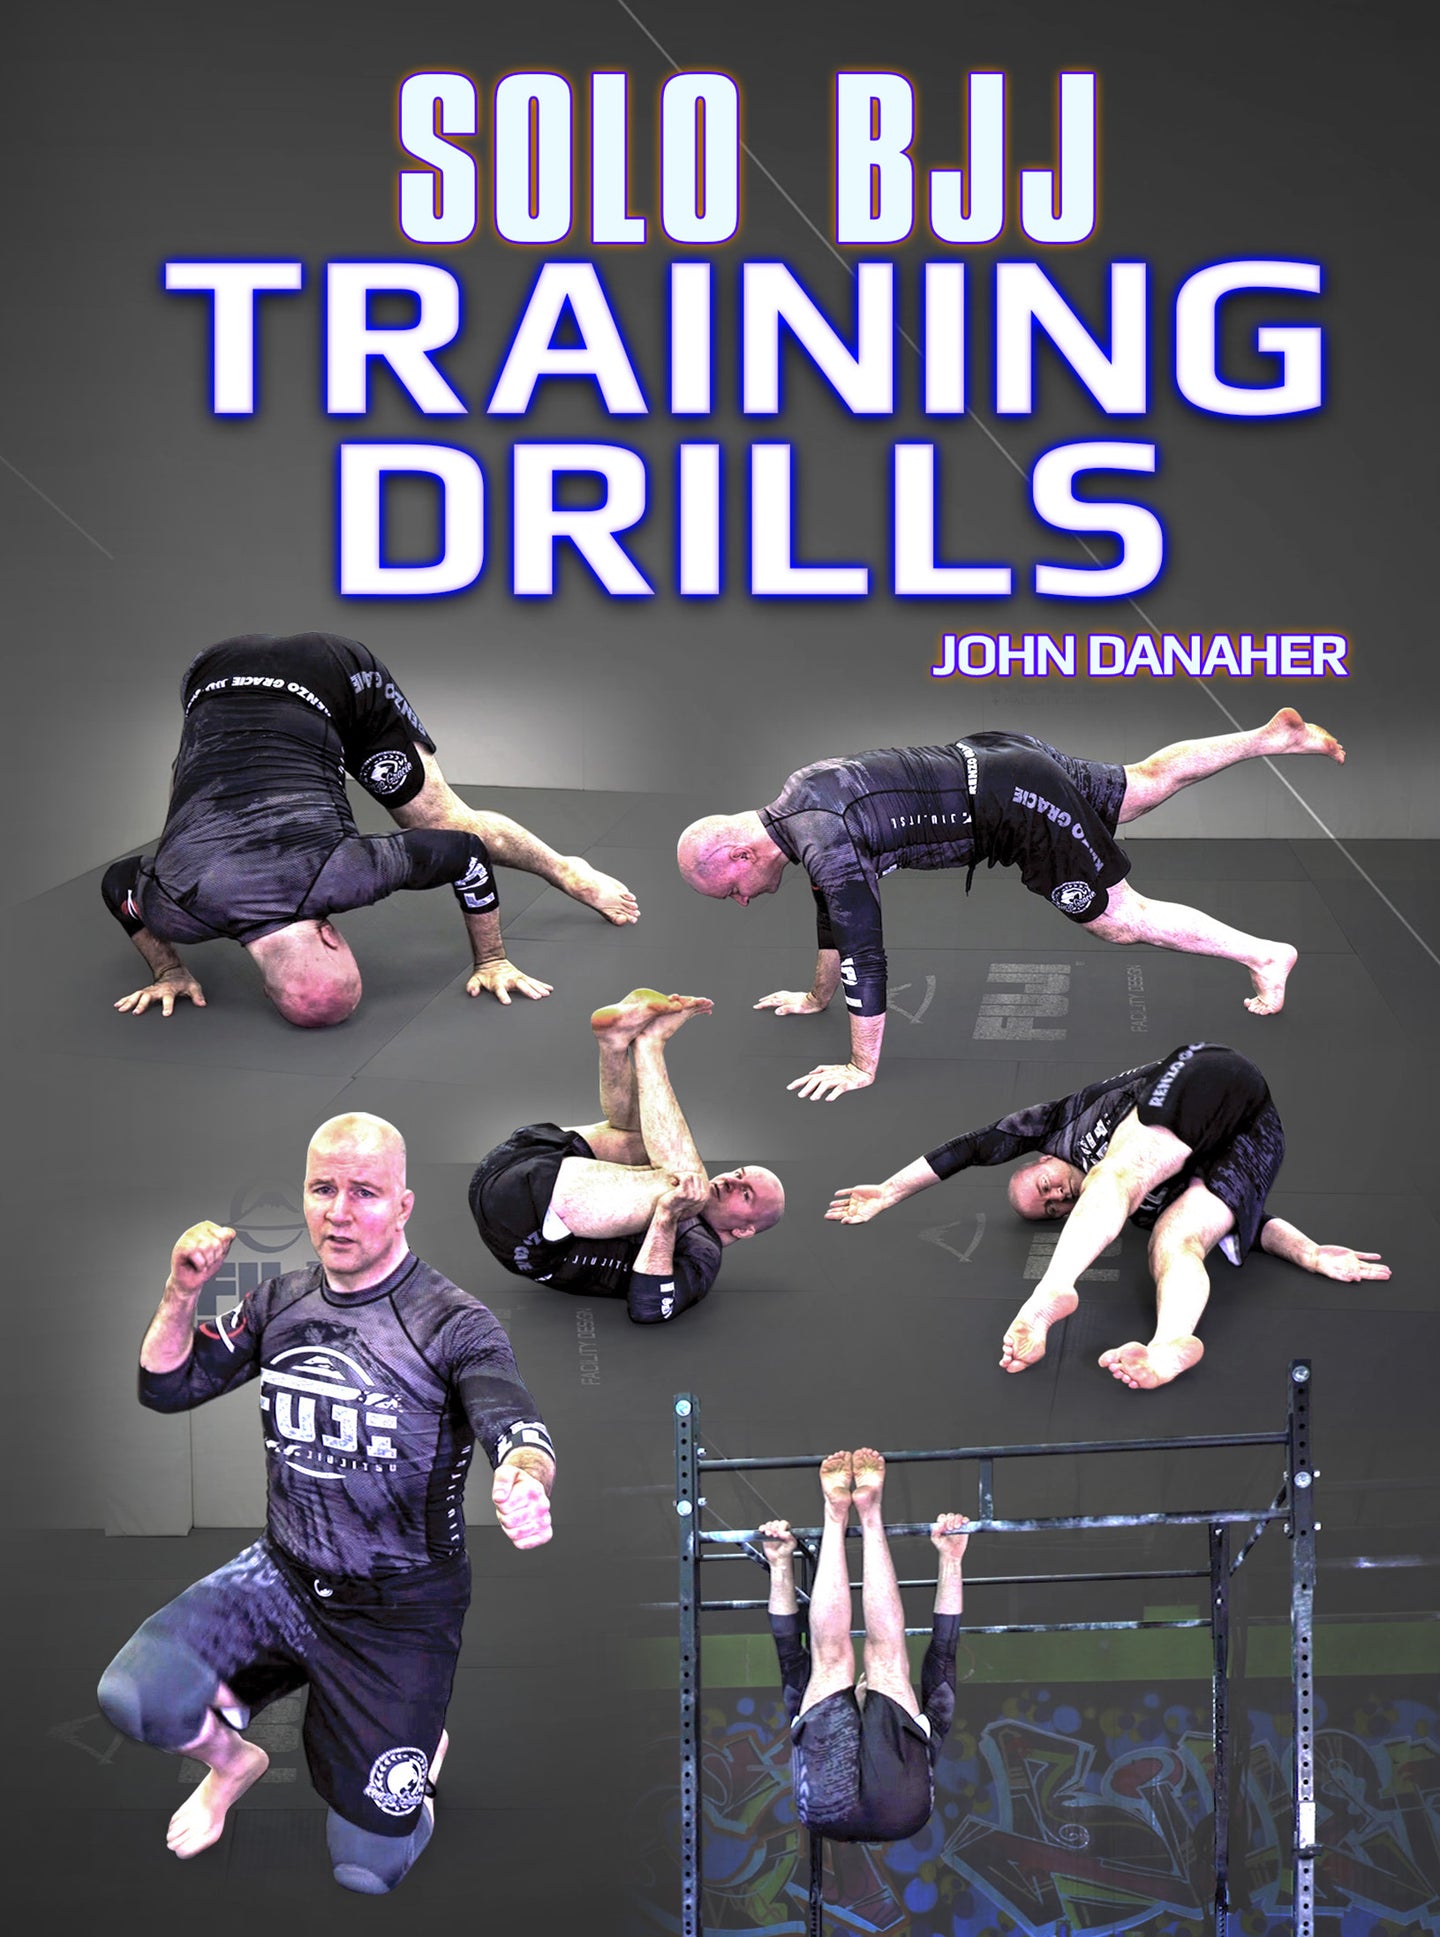 Chris Adams Personal Training - Chris Adams Personal Training